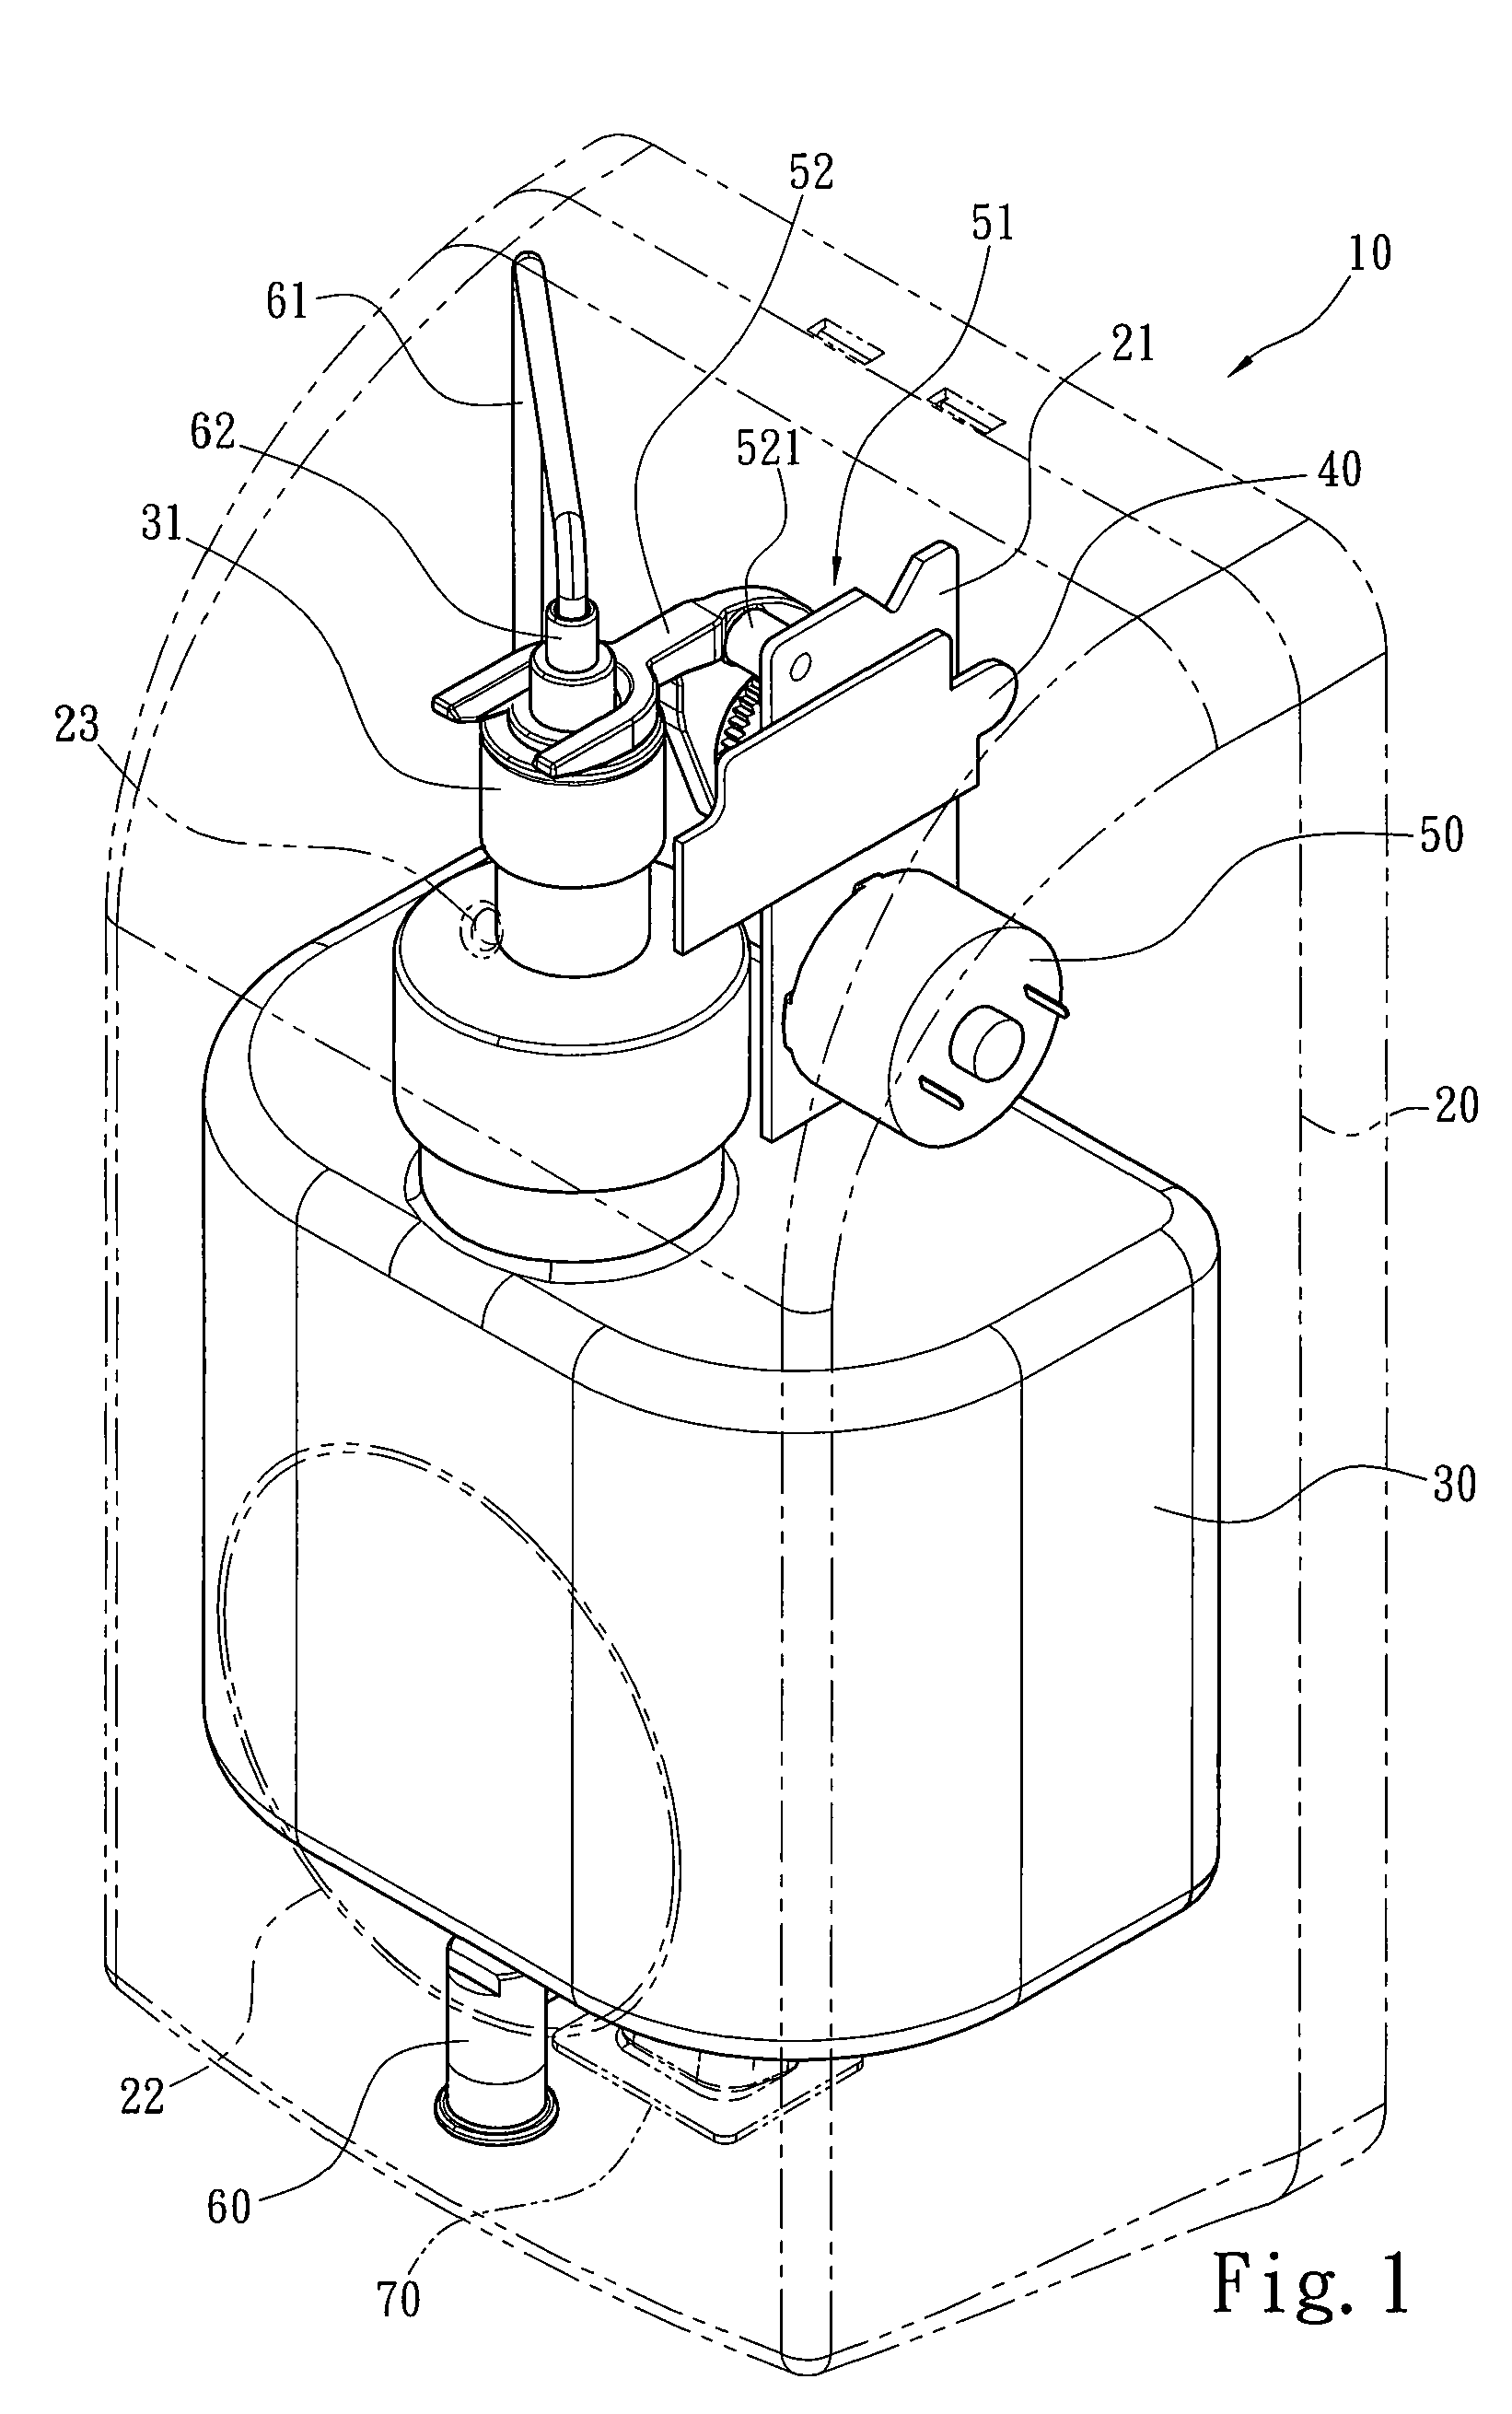 Structure of automatic foam soap dispenser